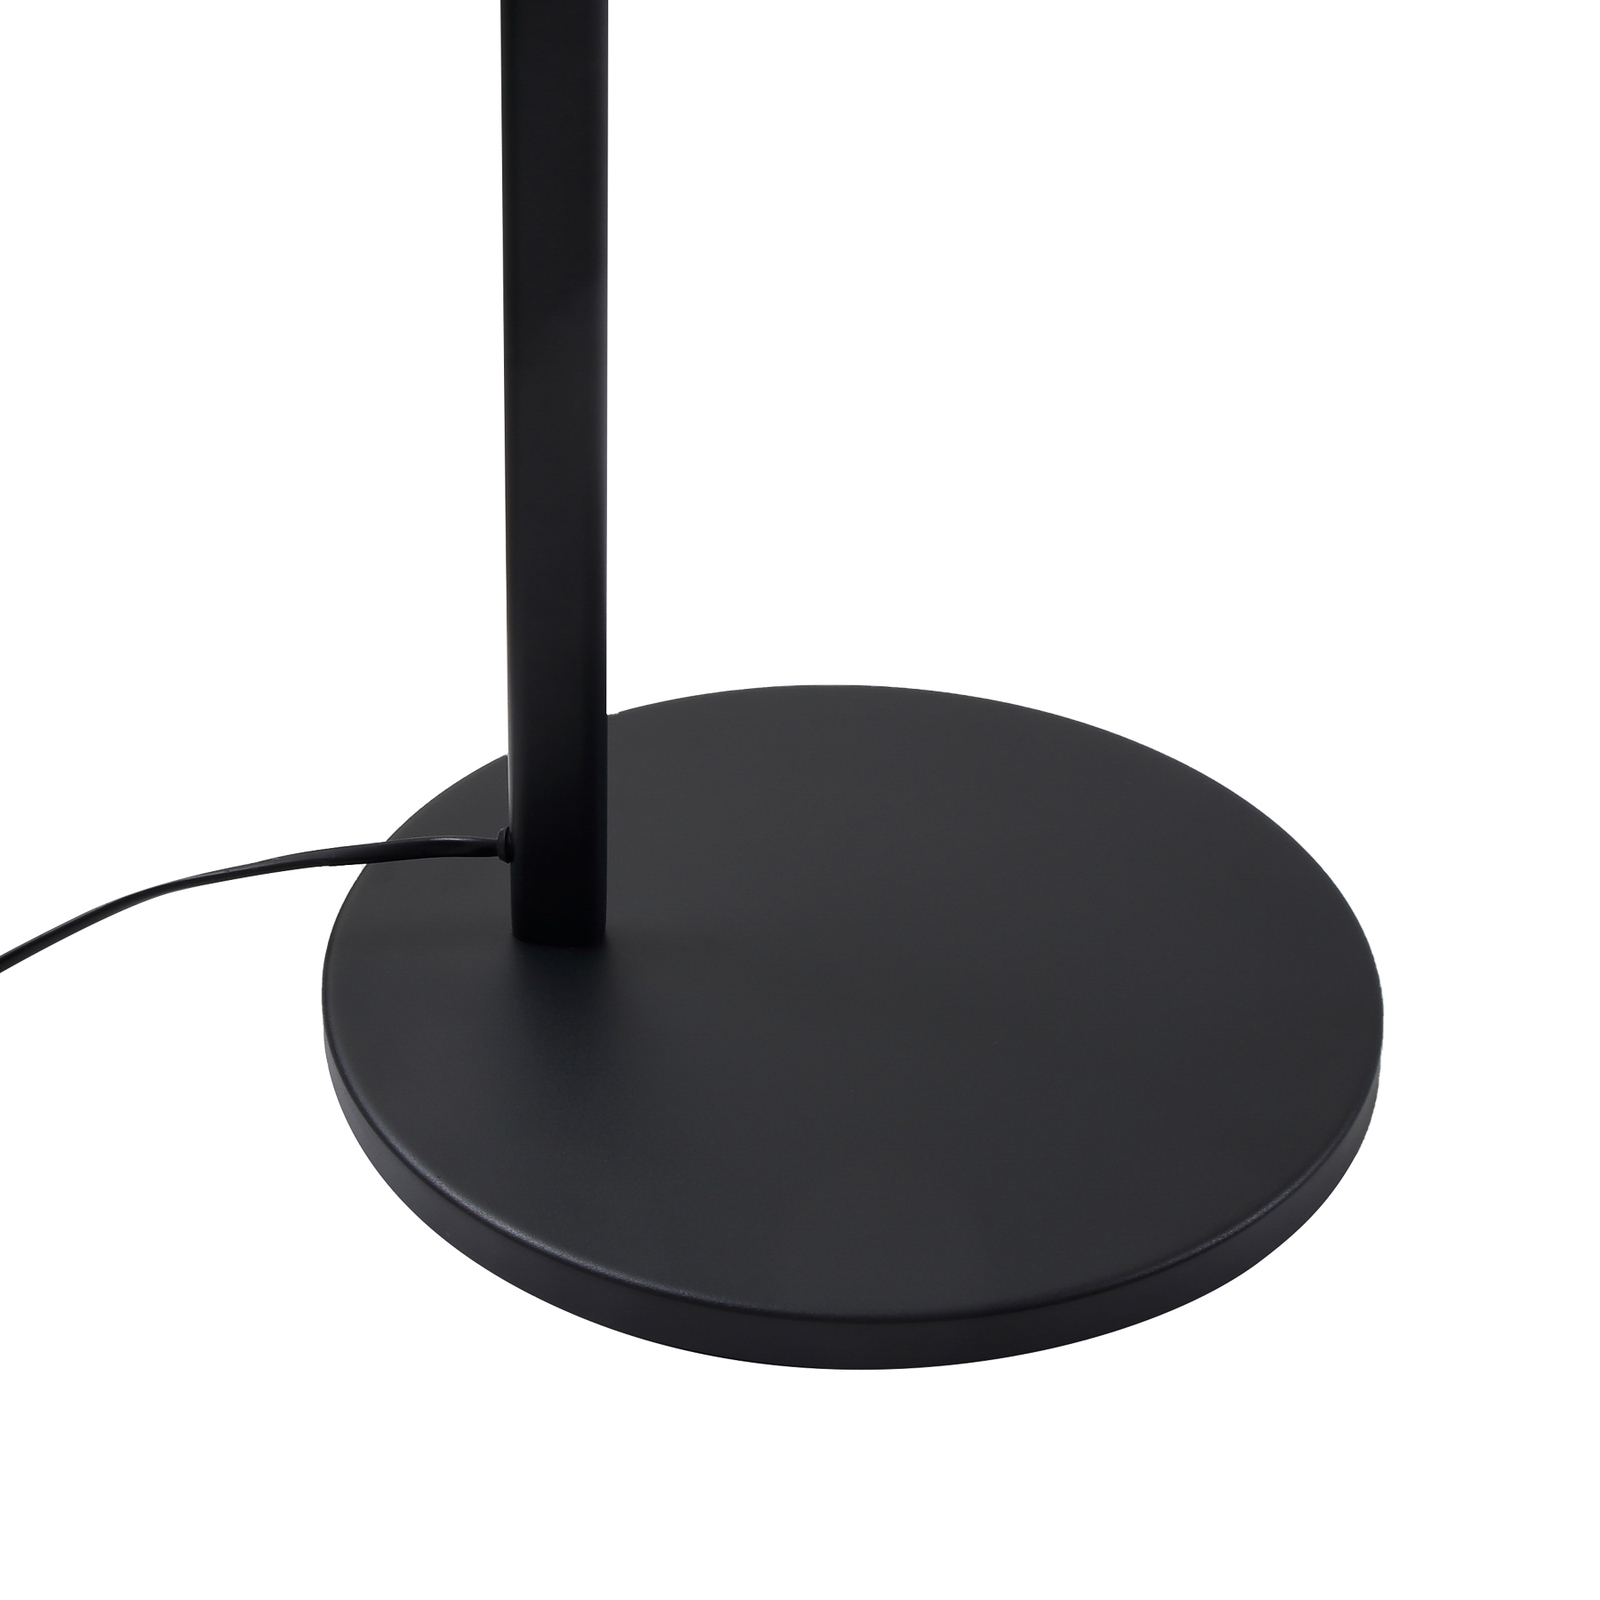 Lucande Silka floor lamp, height 216 cm, adjustable, black